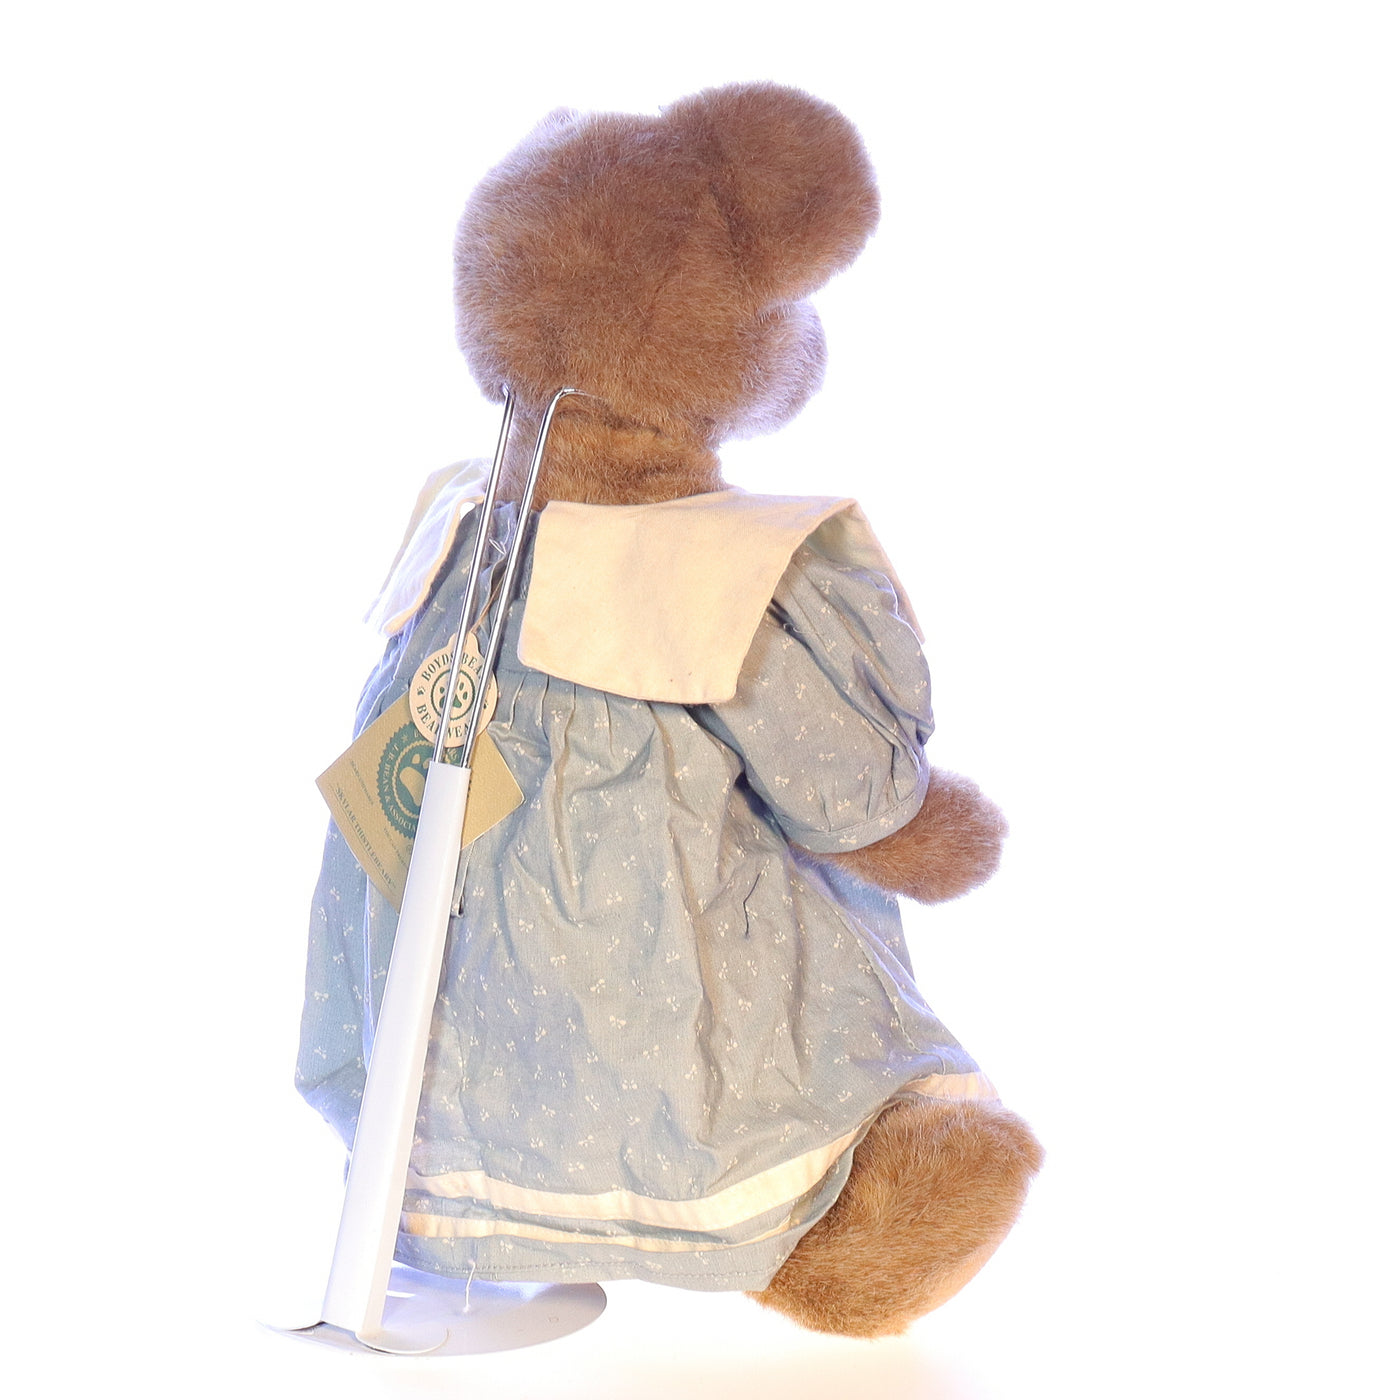 Boyds Bears Collection Plush with Tags J.B. Bean & Associates 911951 1985 16"